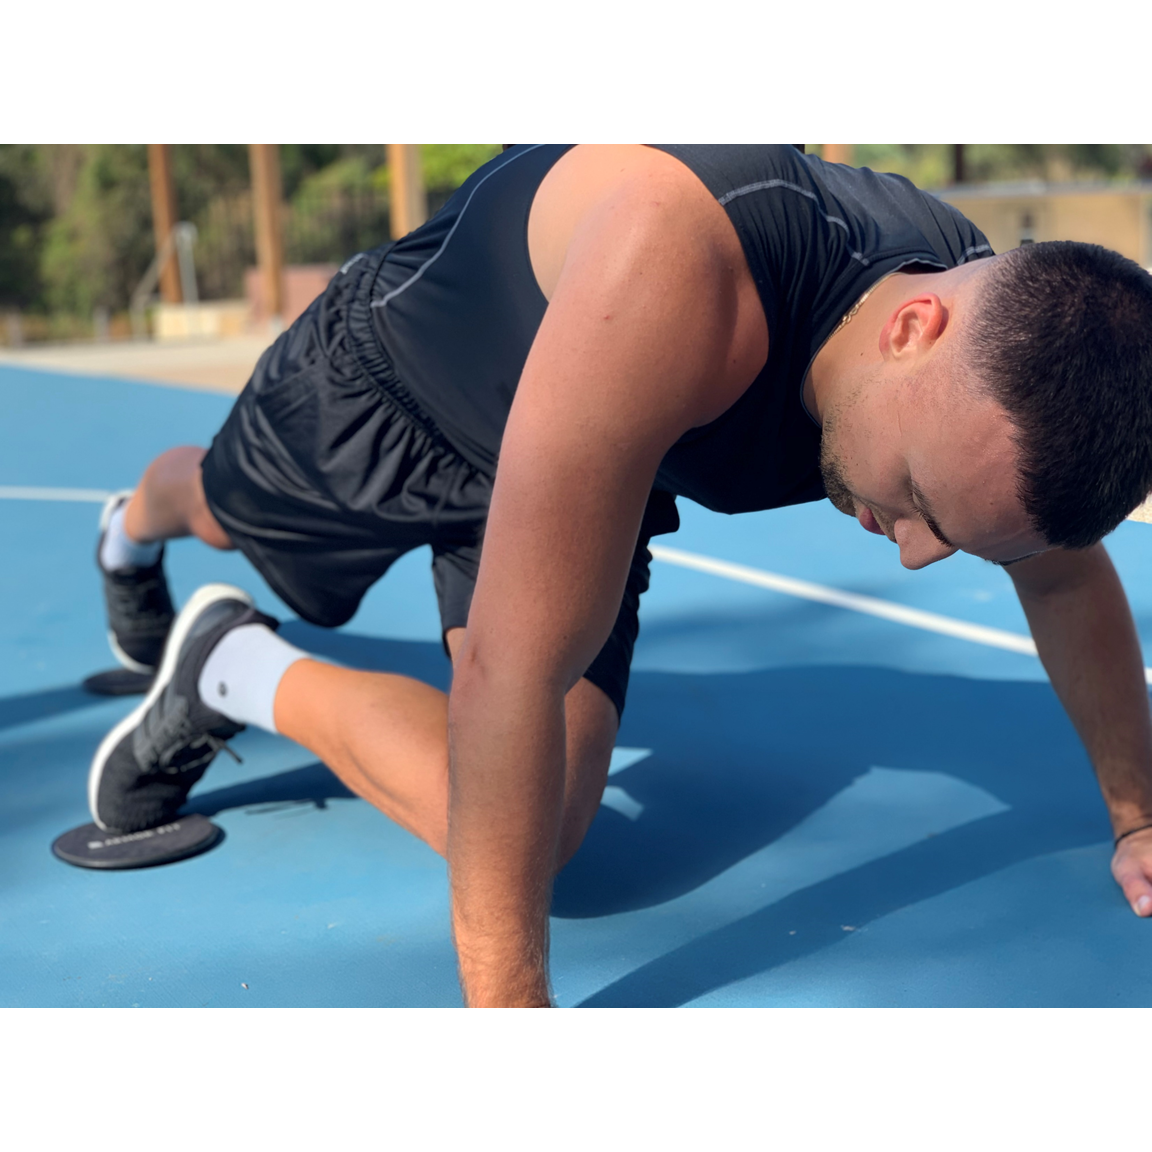 Filfeel Oval Shaped Exercise Sliding Gliding Disc Exercise Core Slider Use  On Carpet For Strength Training,Workout 